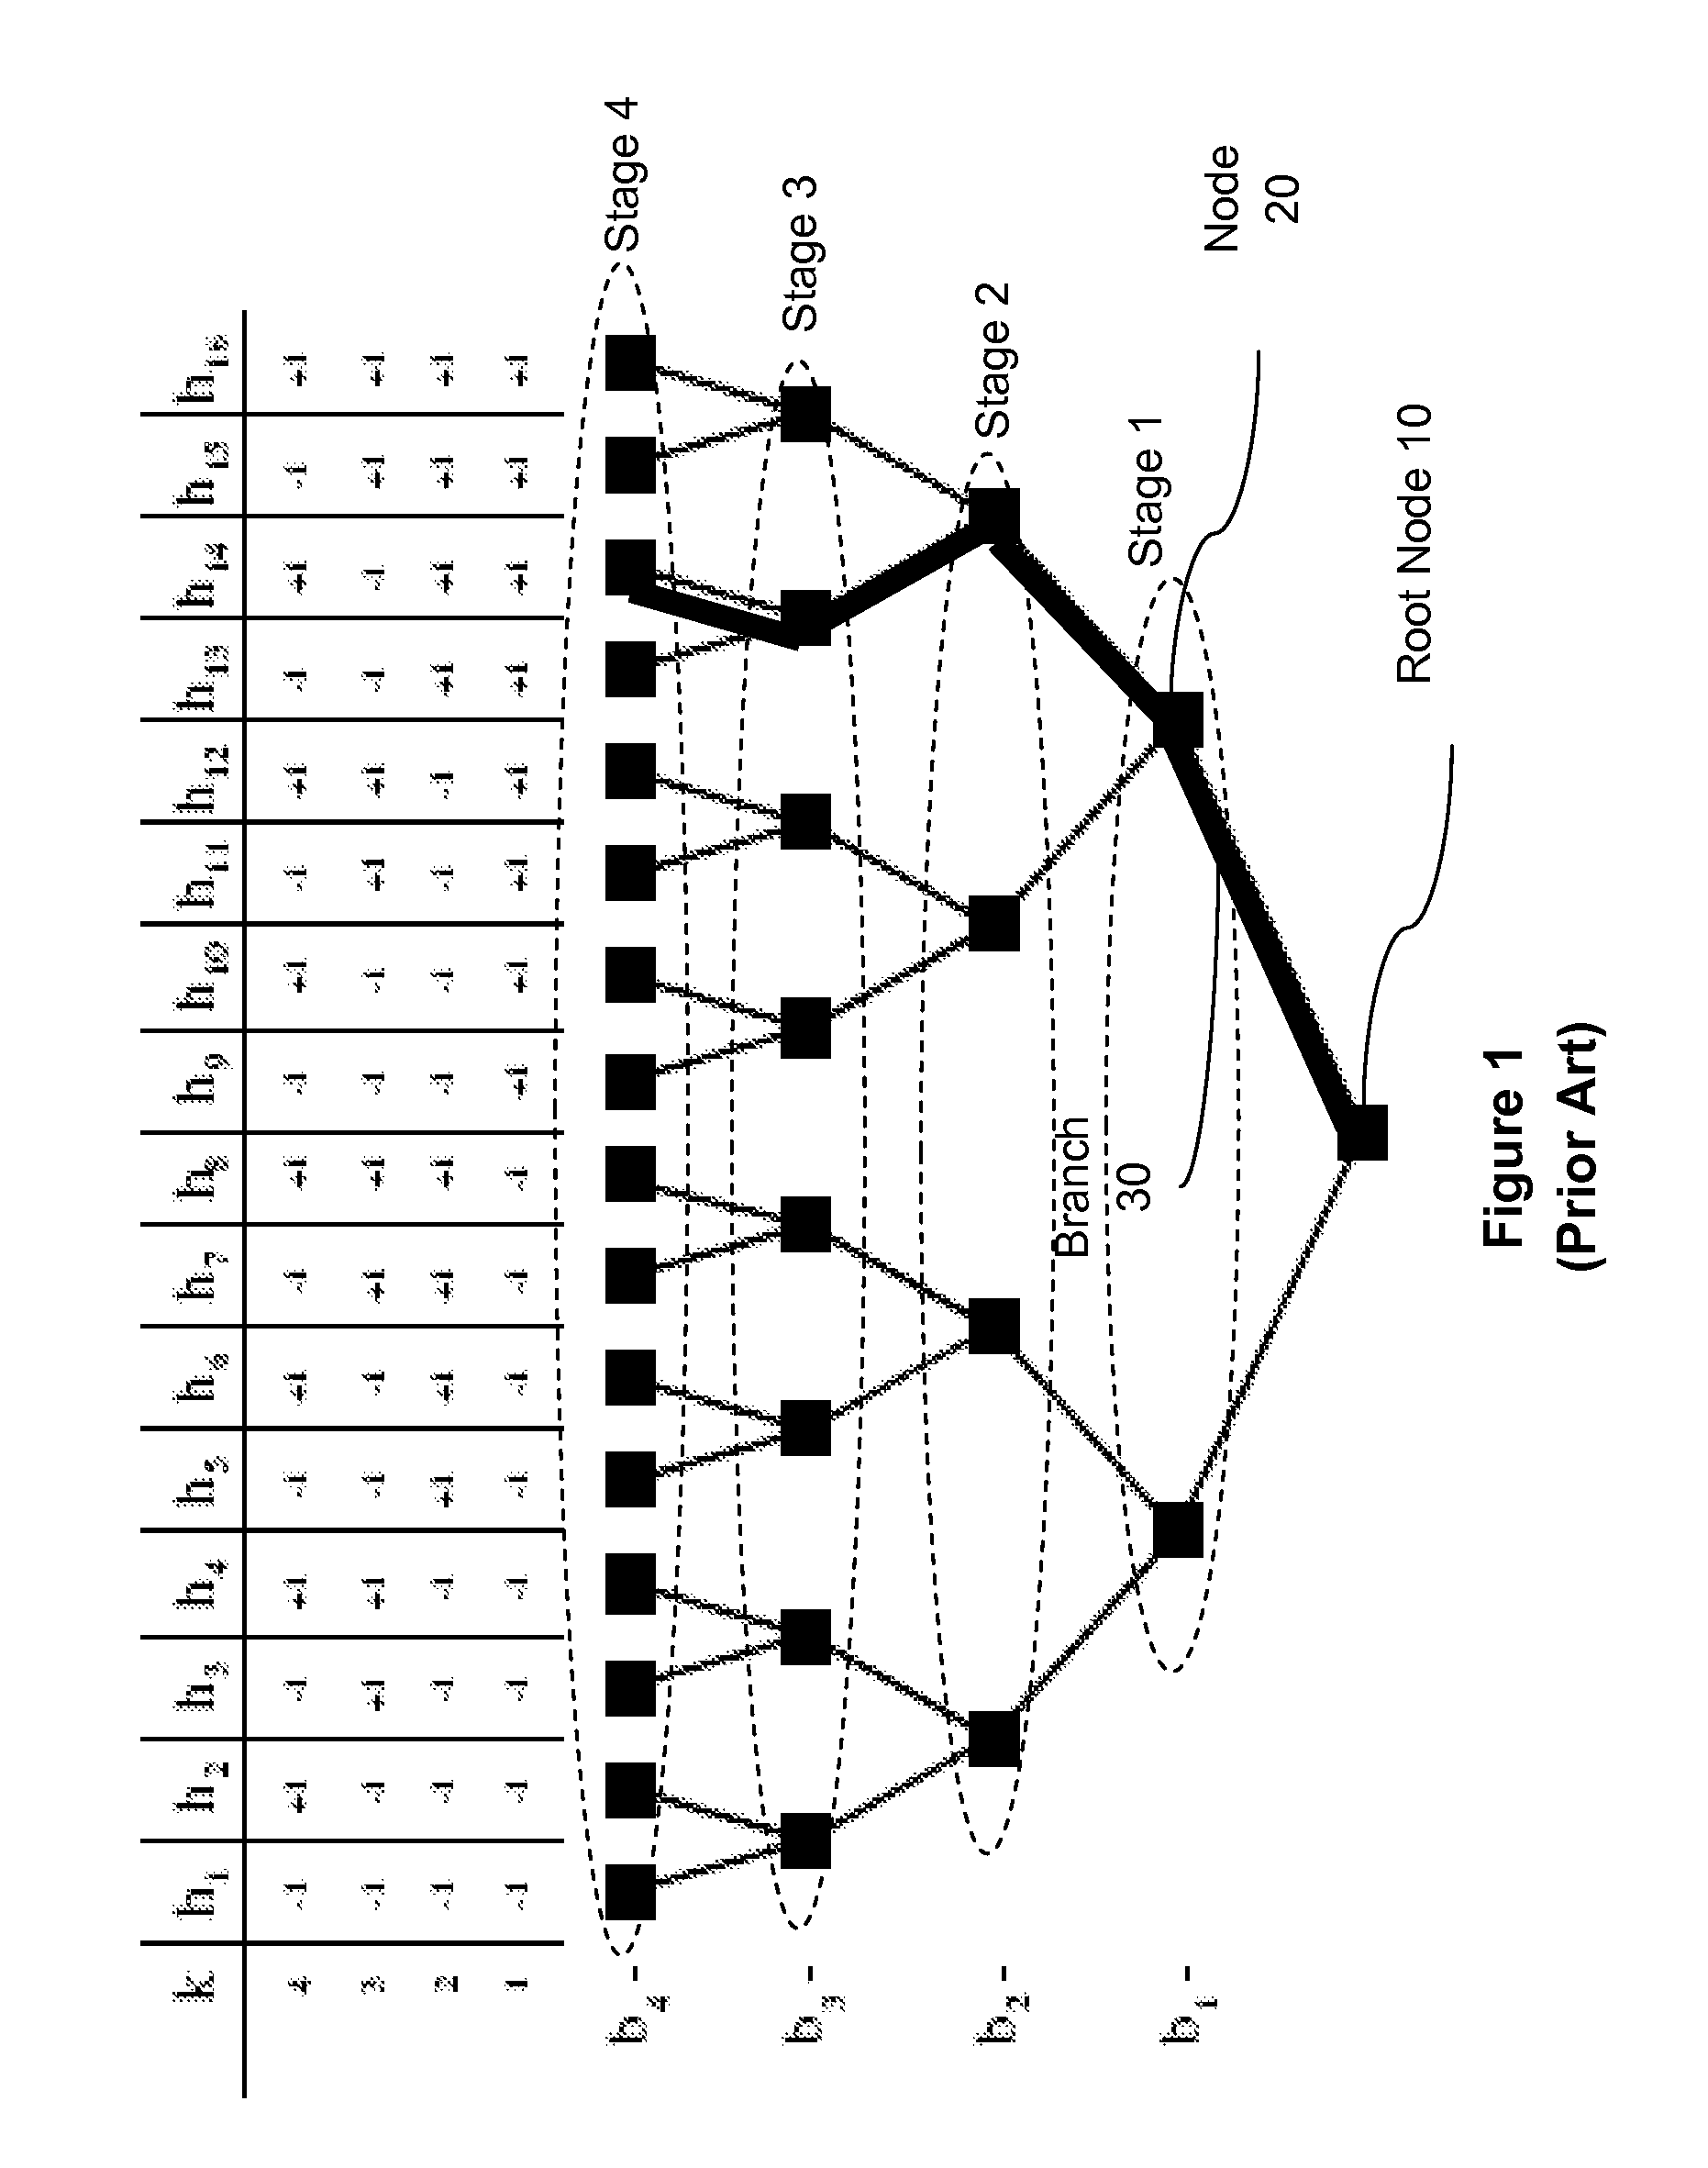 M-Algorithm multiuser detector with correlation based pruning